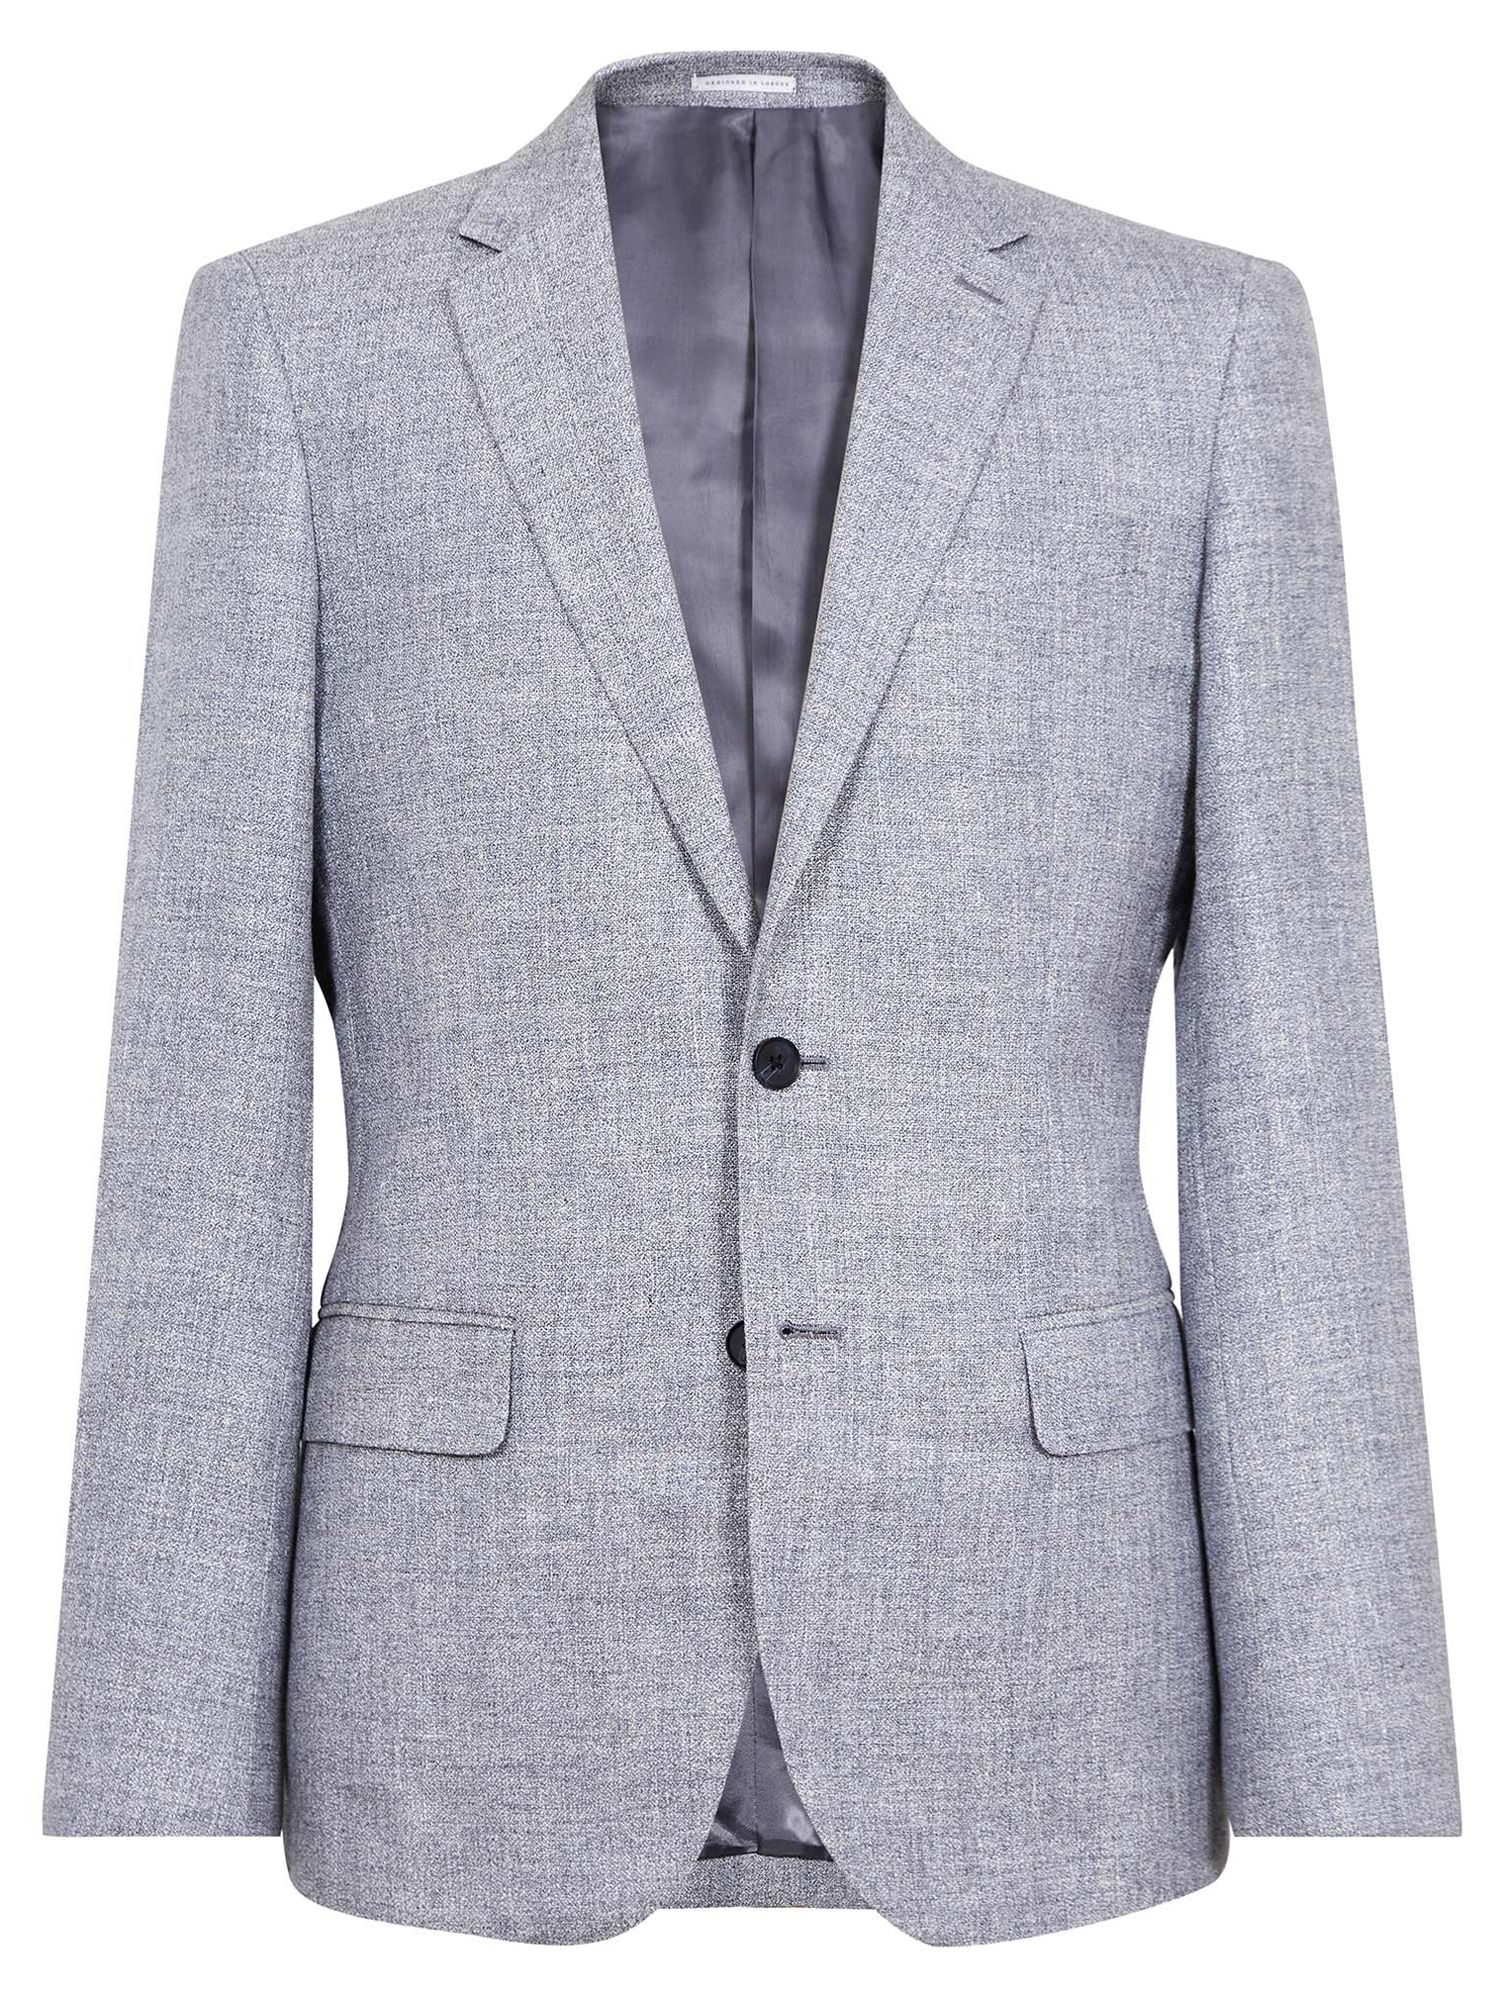 Reiss Amatrice Linen Blend Modern Fit Suit Jacket, Soft Blue at John ...